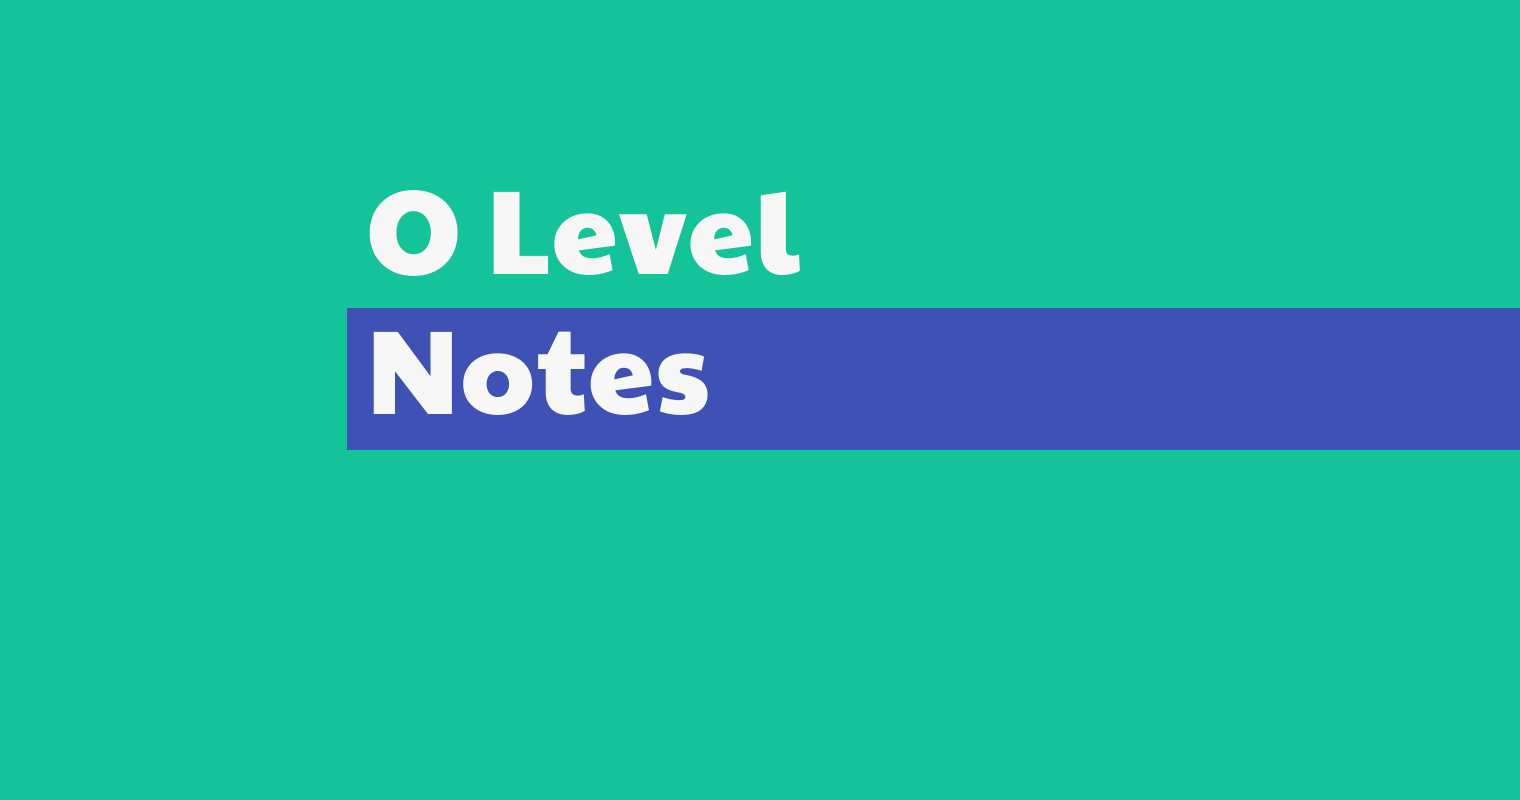 O level Notes